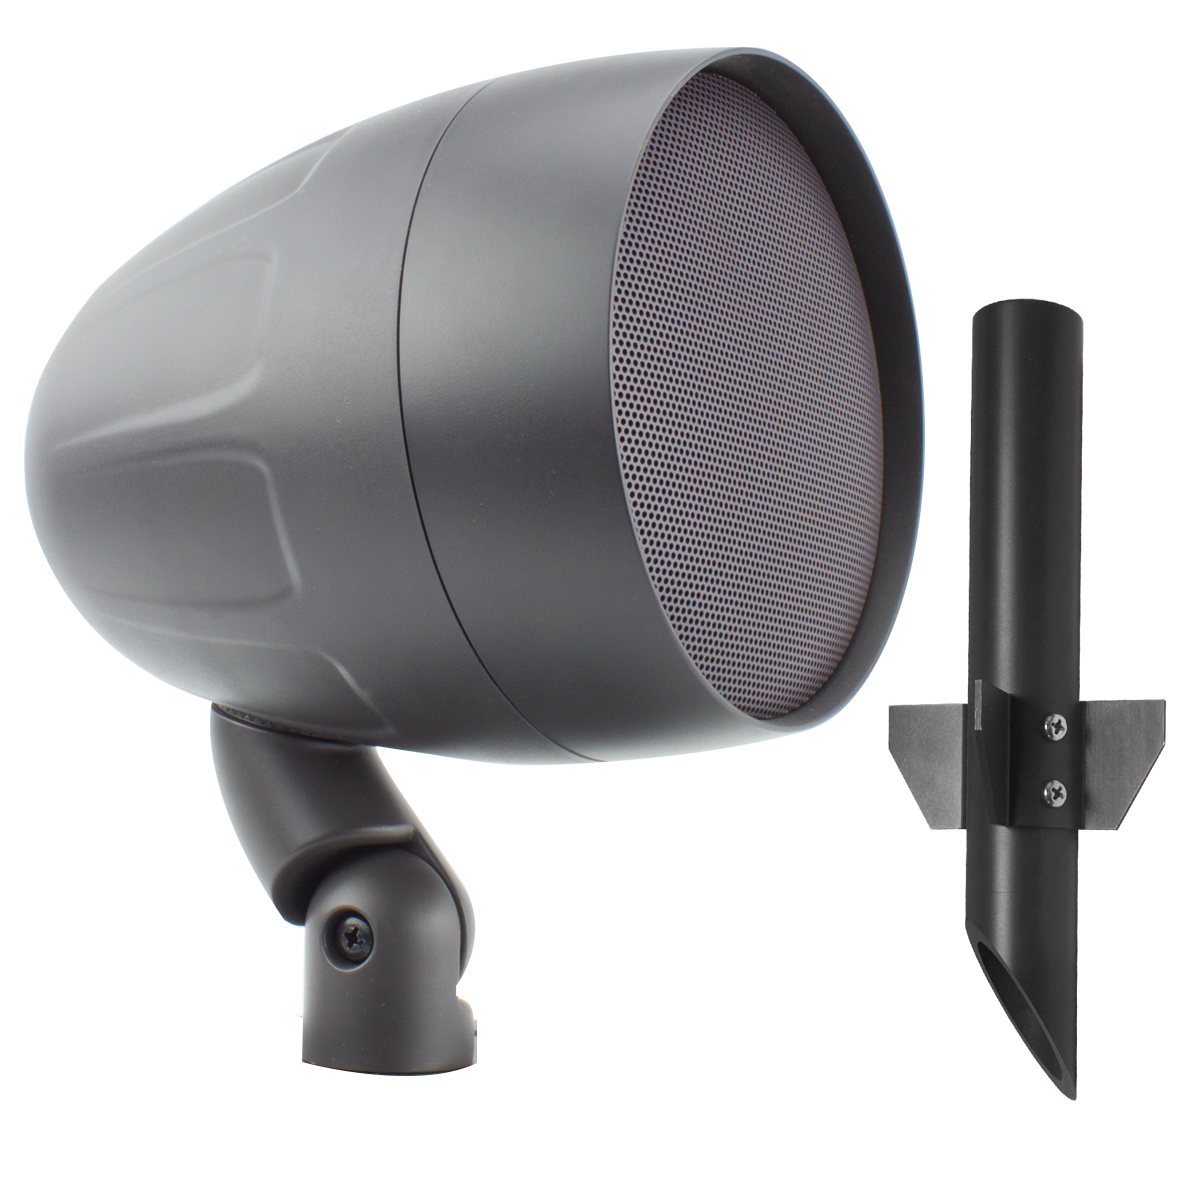 TRUAUDIO AcoustiScape 6.5' Landscape outdoor speaker, 2.5 - 60 watts, 8 ohms / 70v switchable, including stake TRUAUDIO